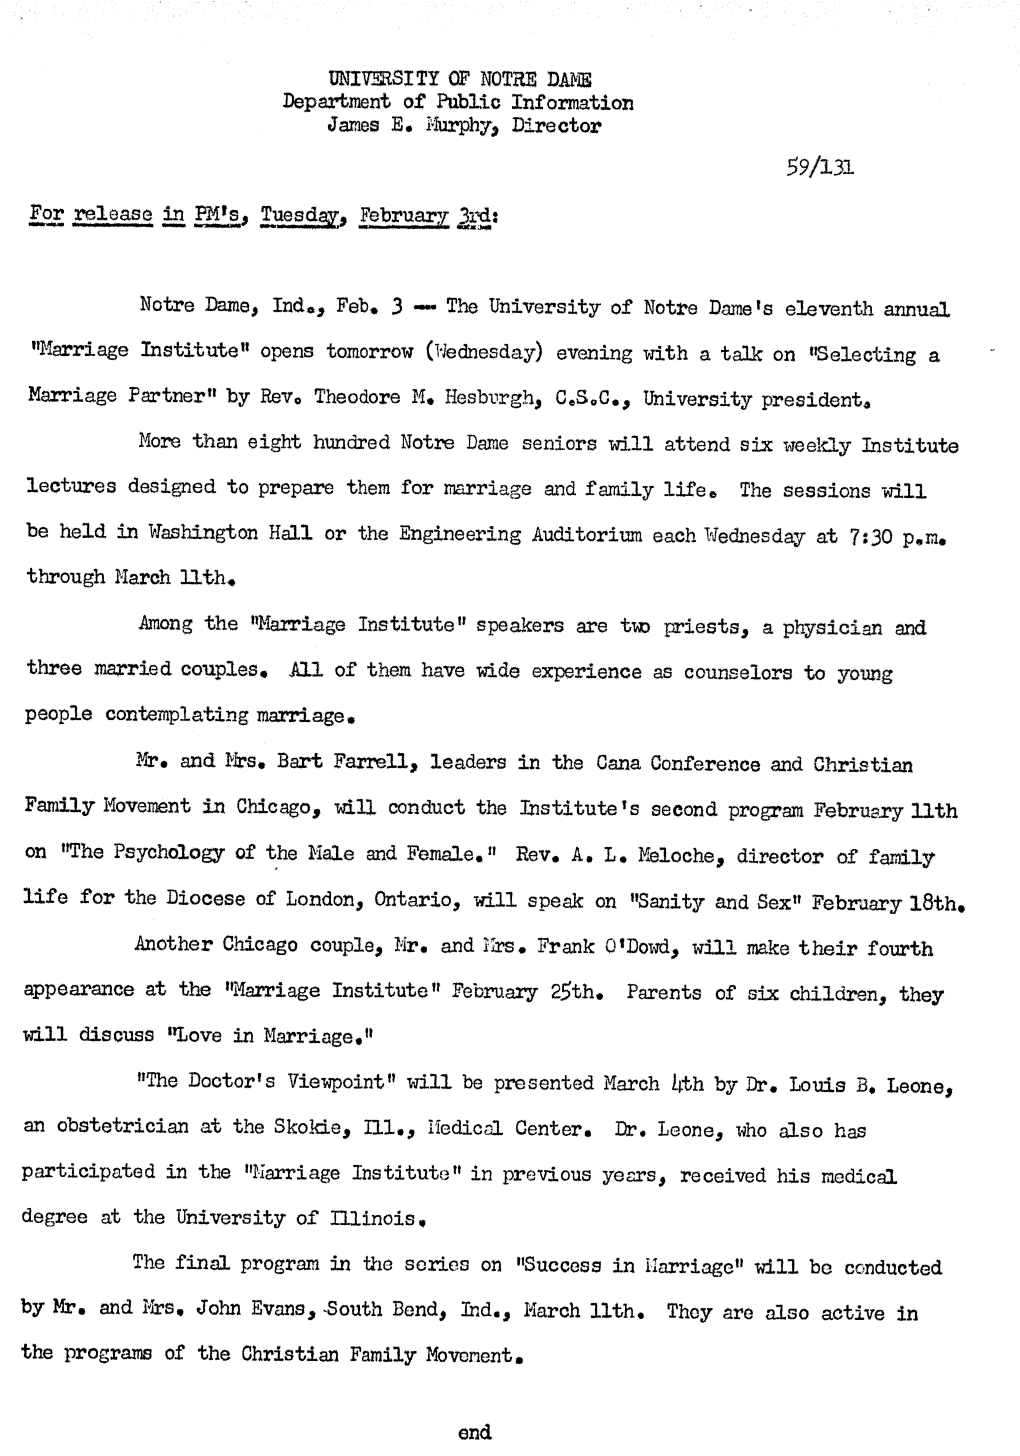 Notre Dame Press Releases, 1959/02